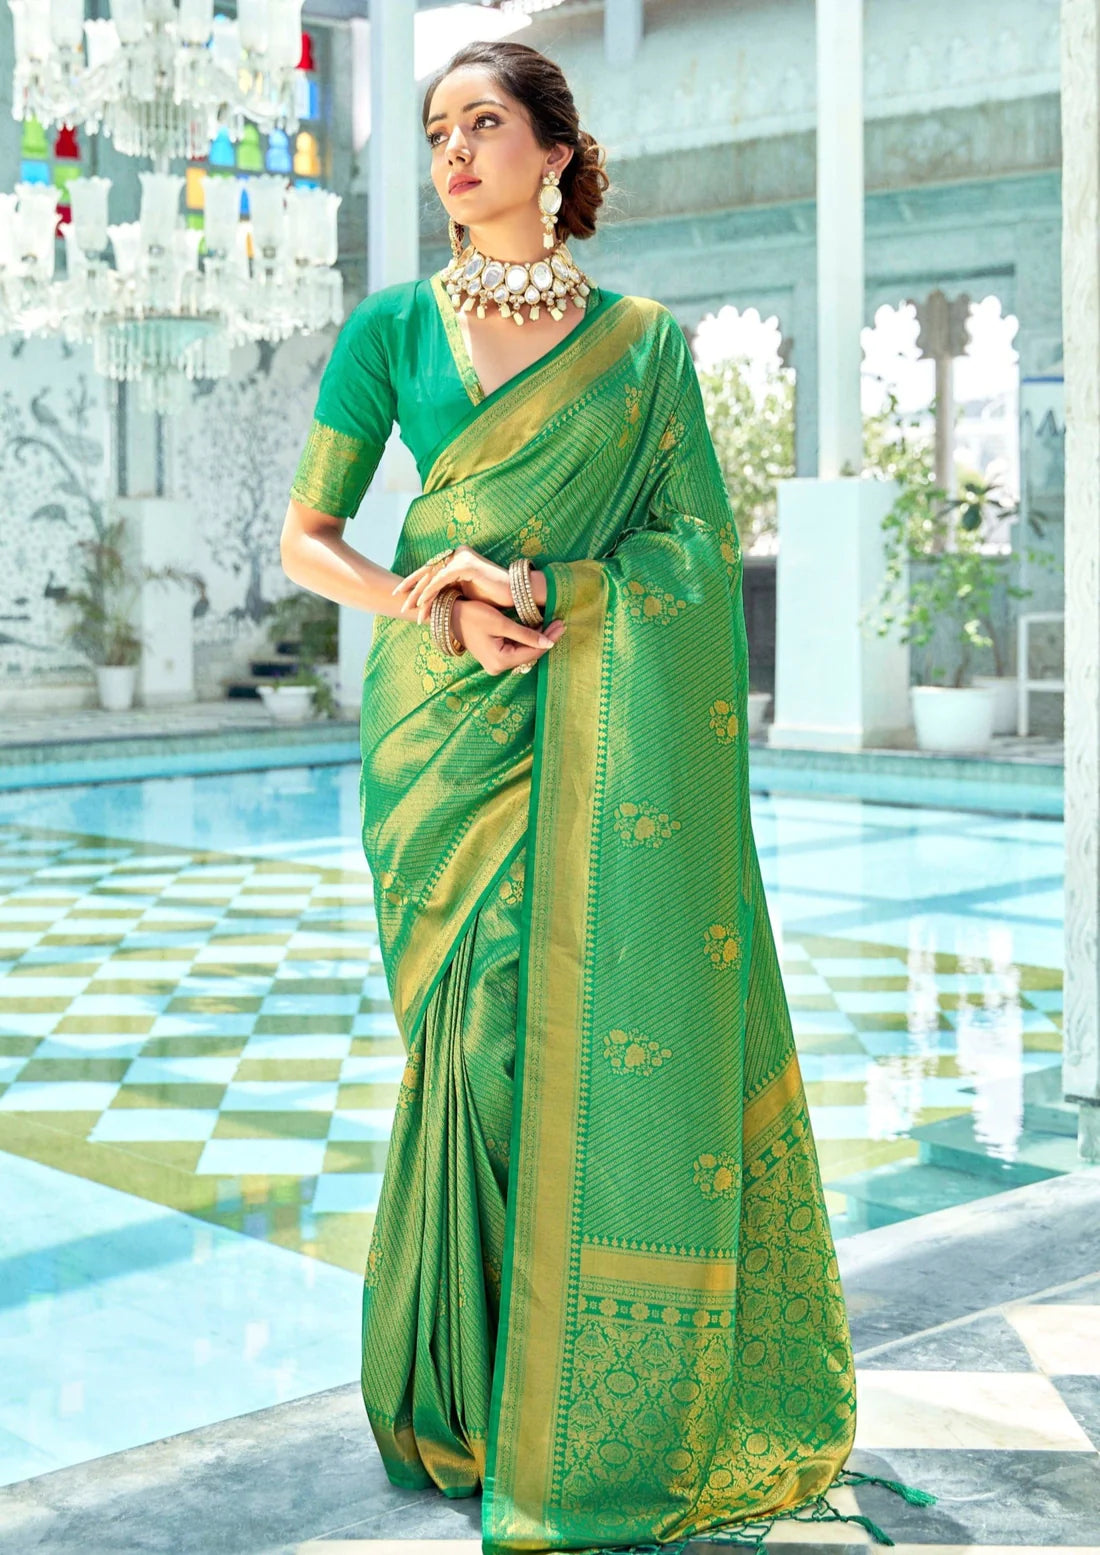 Pure kanjivaram silk emerald green bridal saree online shopping with price for bride india.